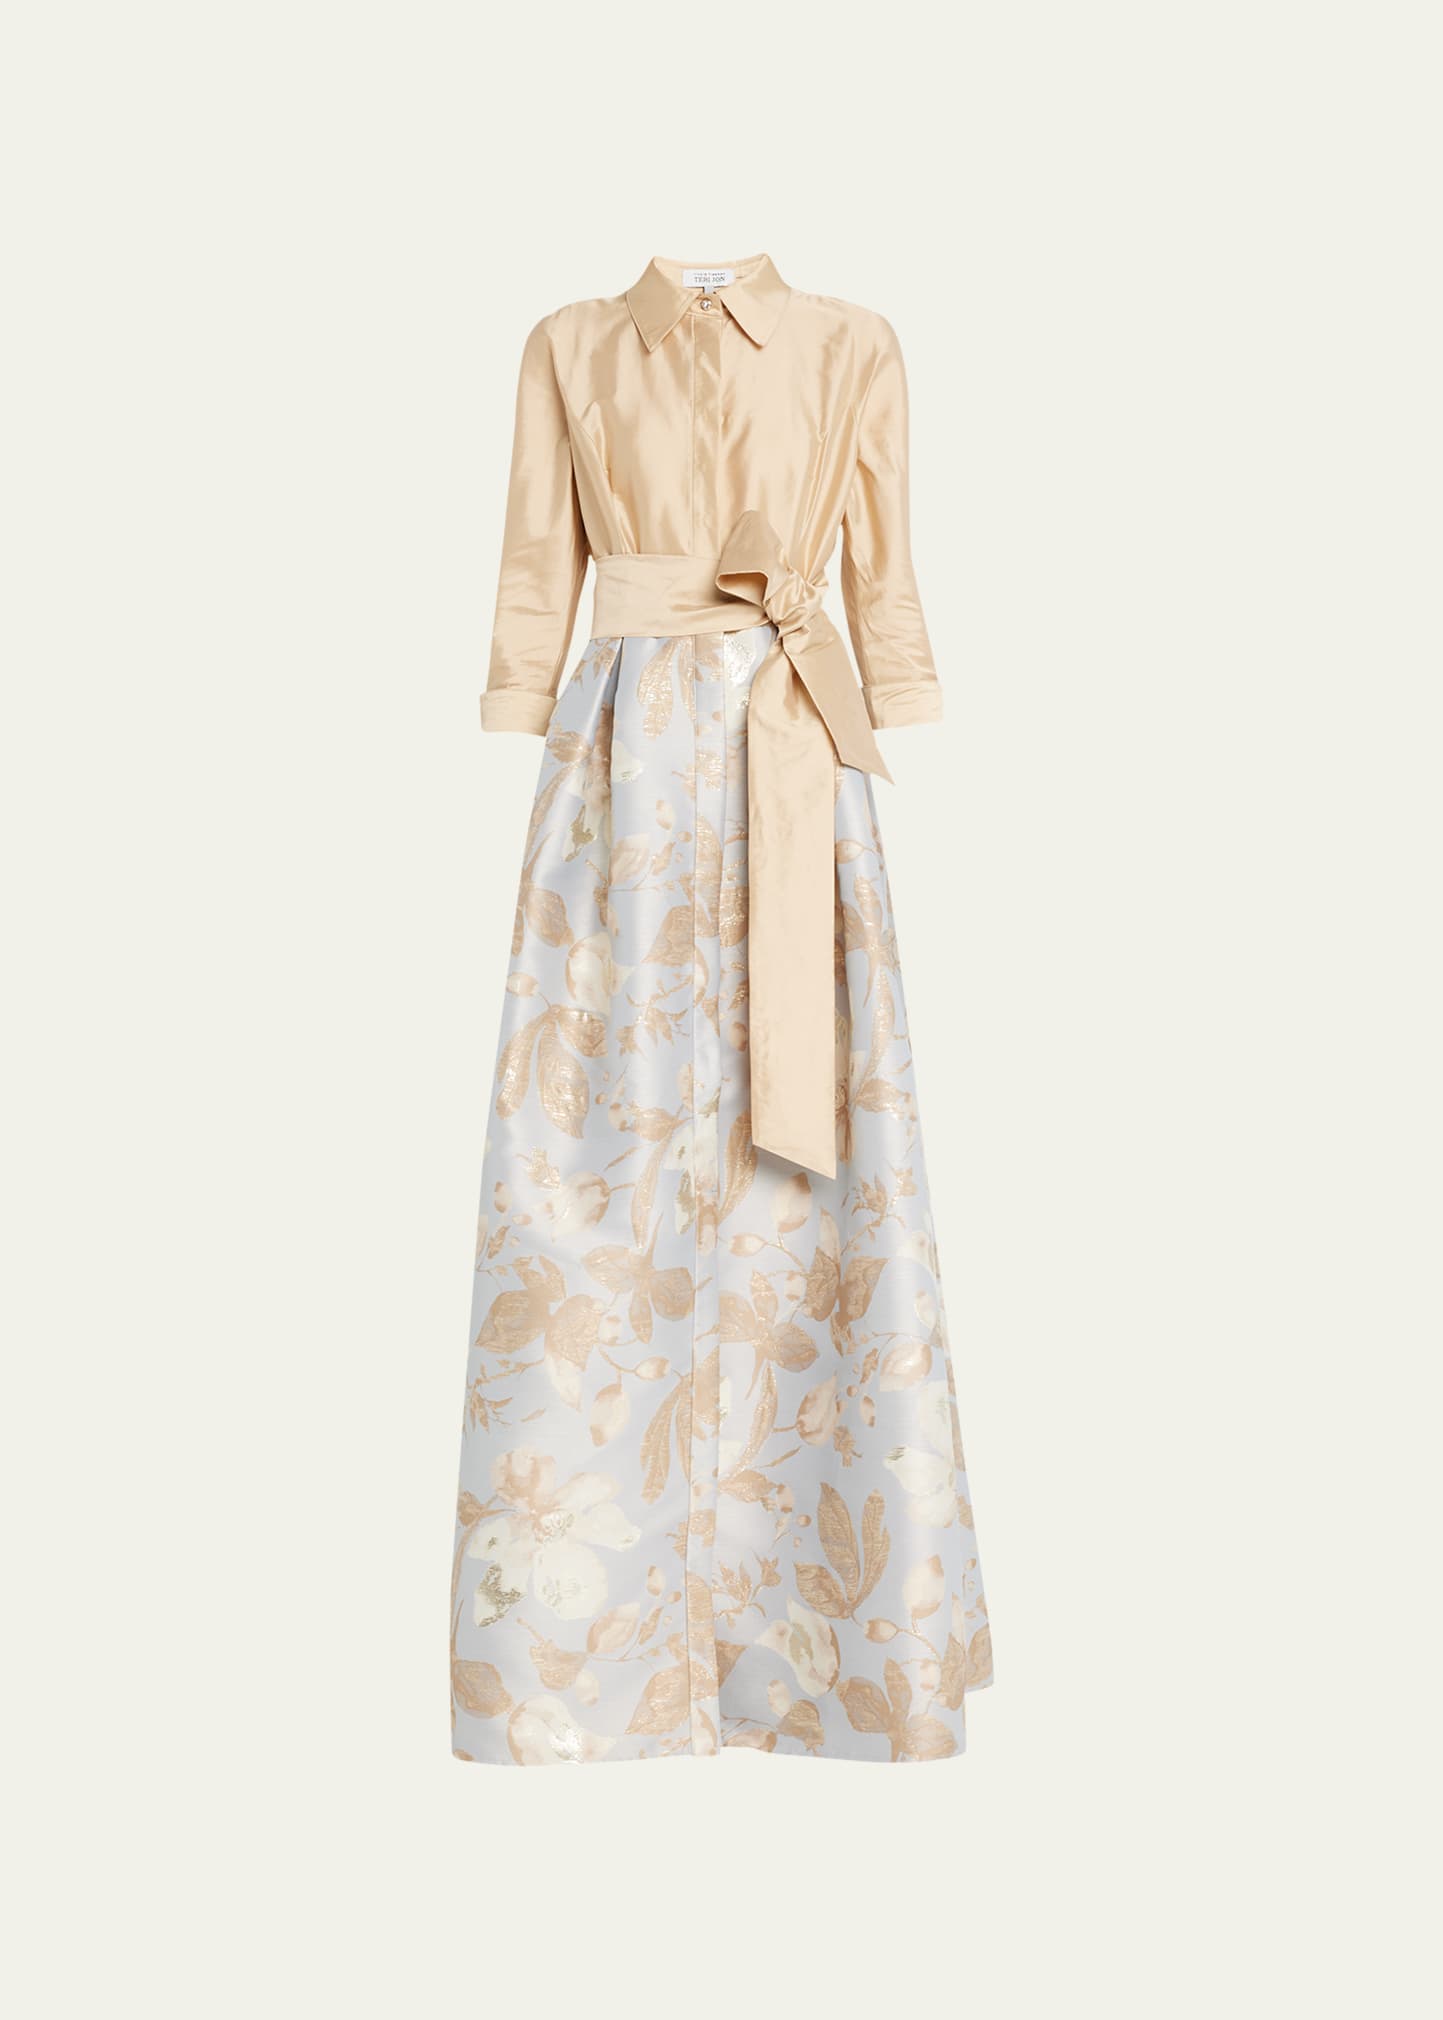 Rickie Freeman For Teri Jon Floral Jacquard Waist Taffeta Shirtdress Gown In Gold Multi